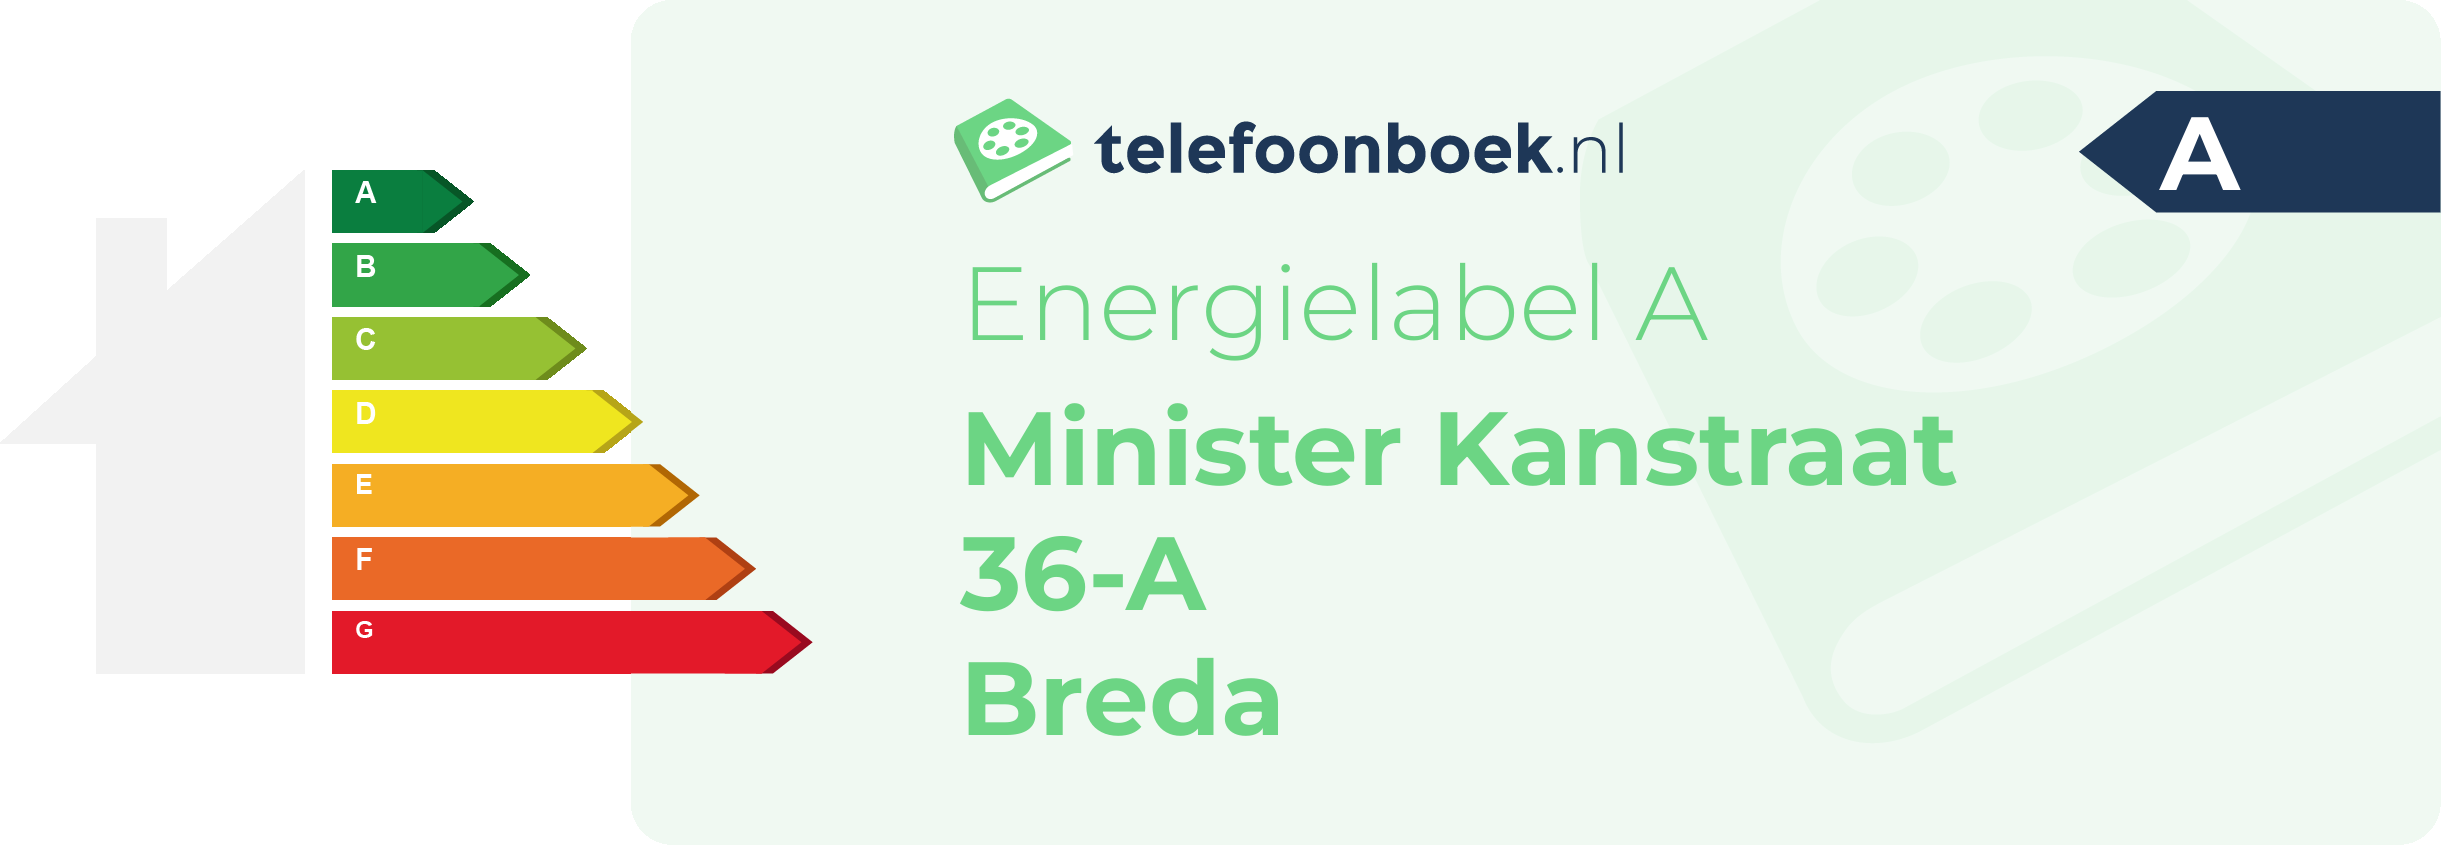 Energielabel Minister Kanstraat 36-A Breda